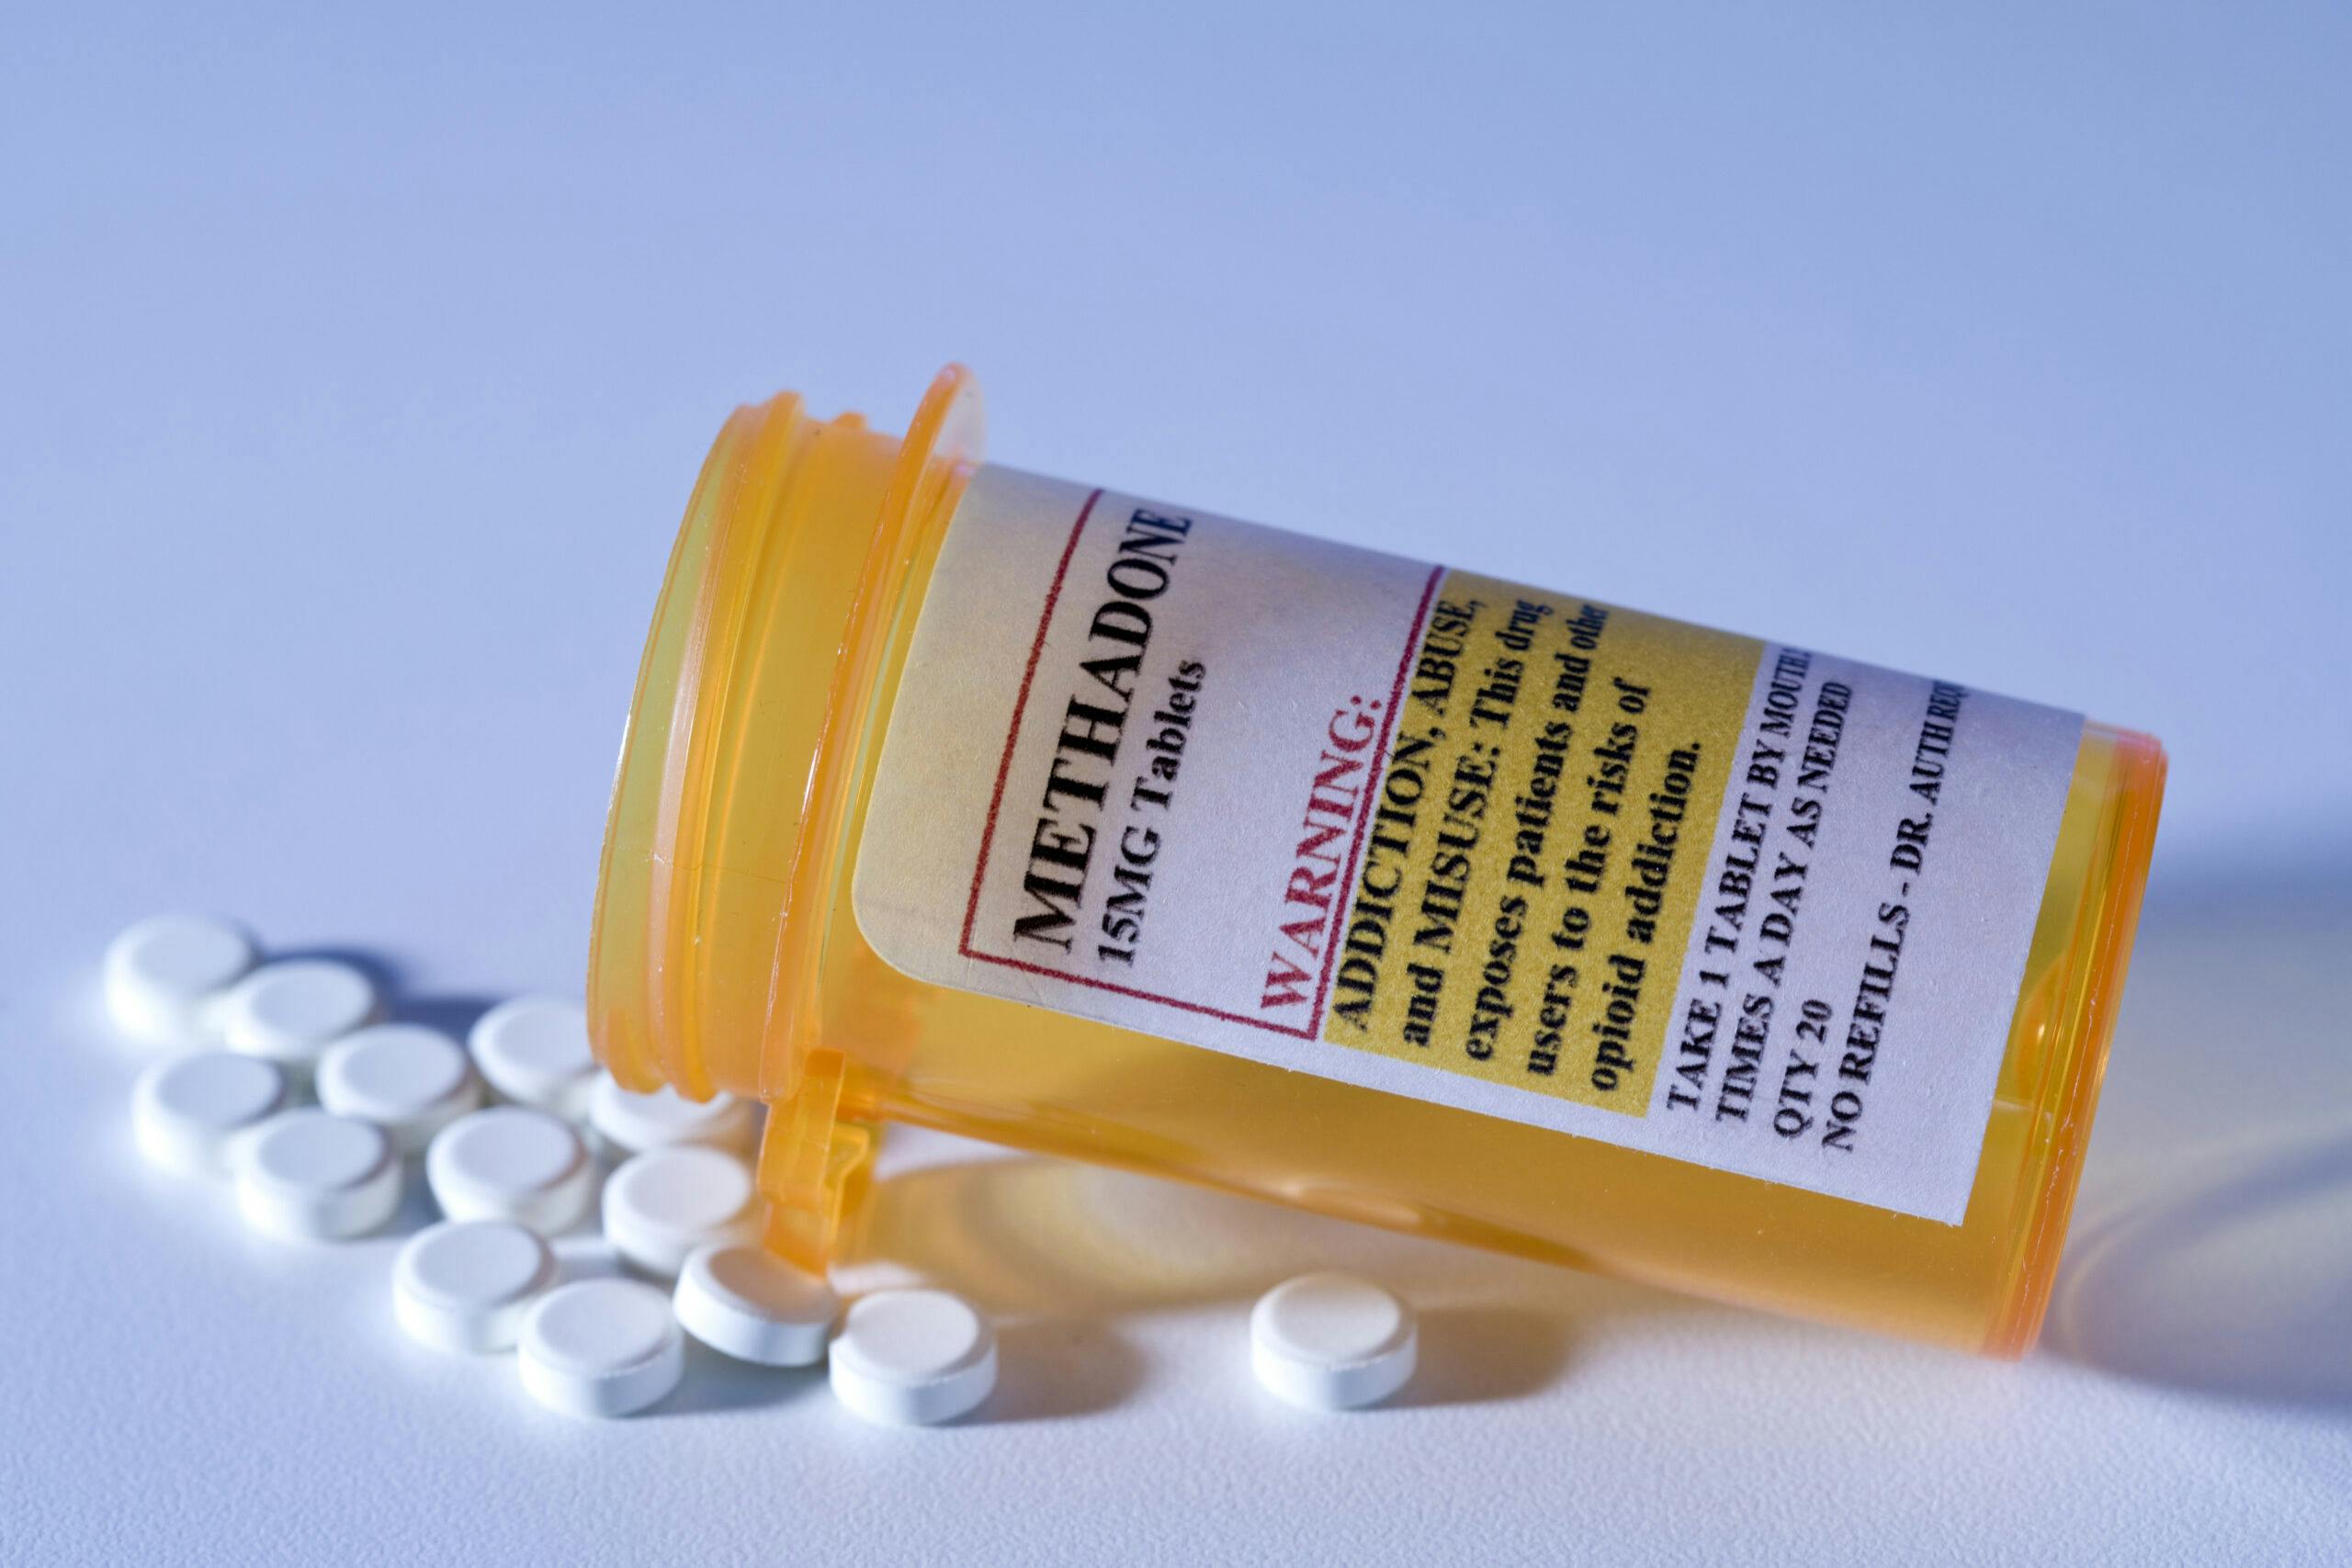 methadone bottle and pills